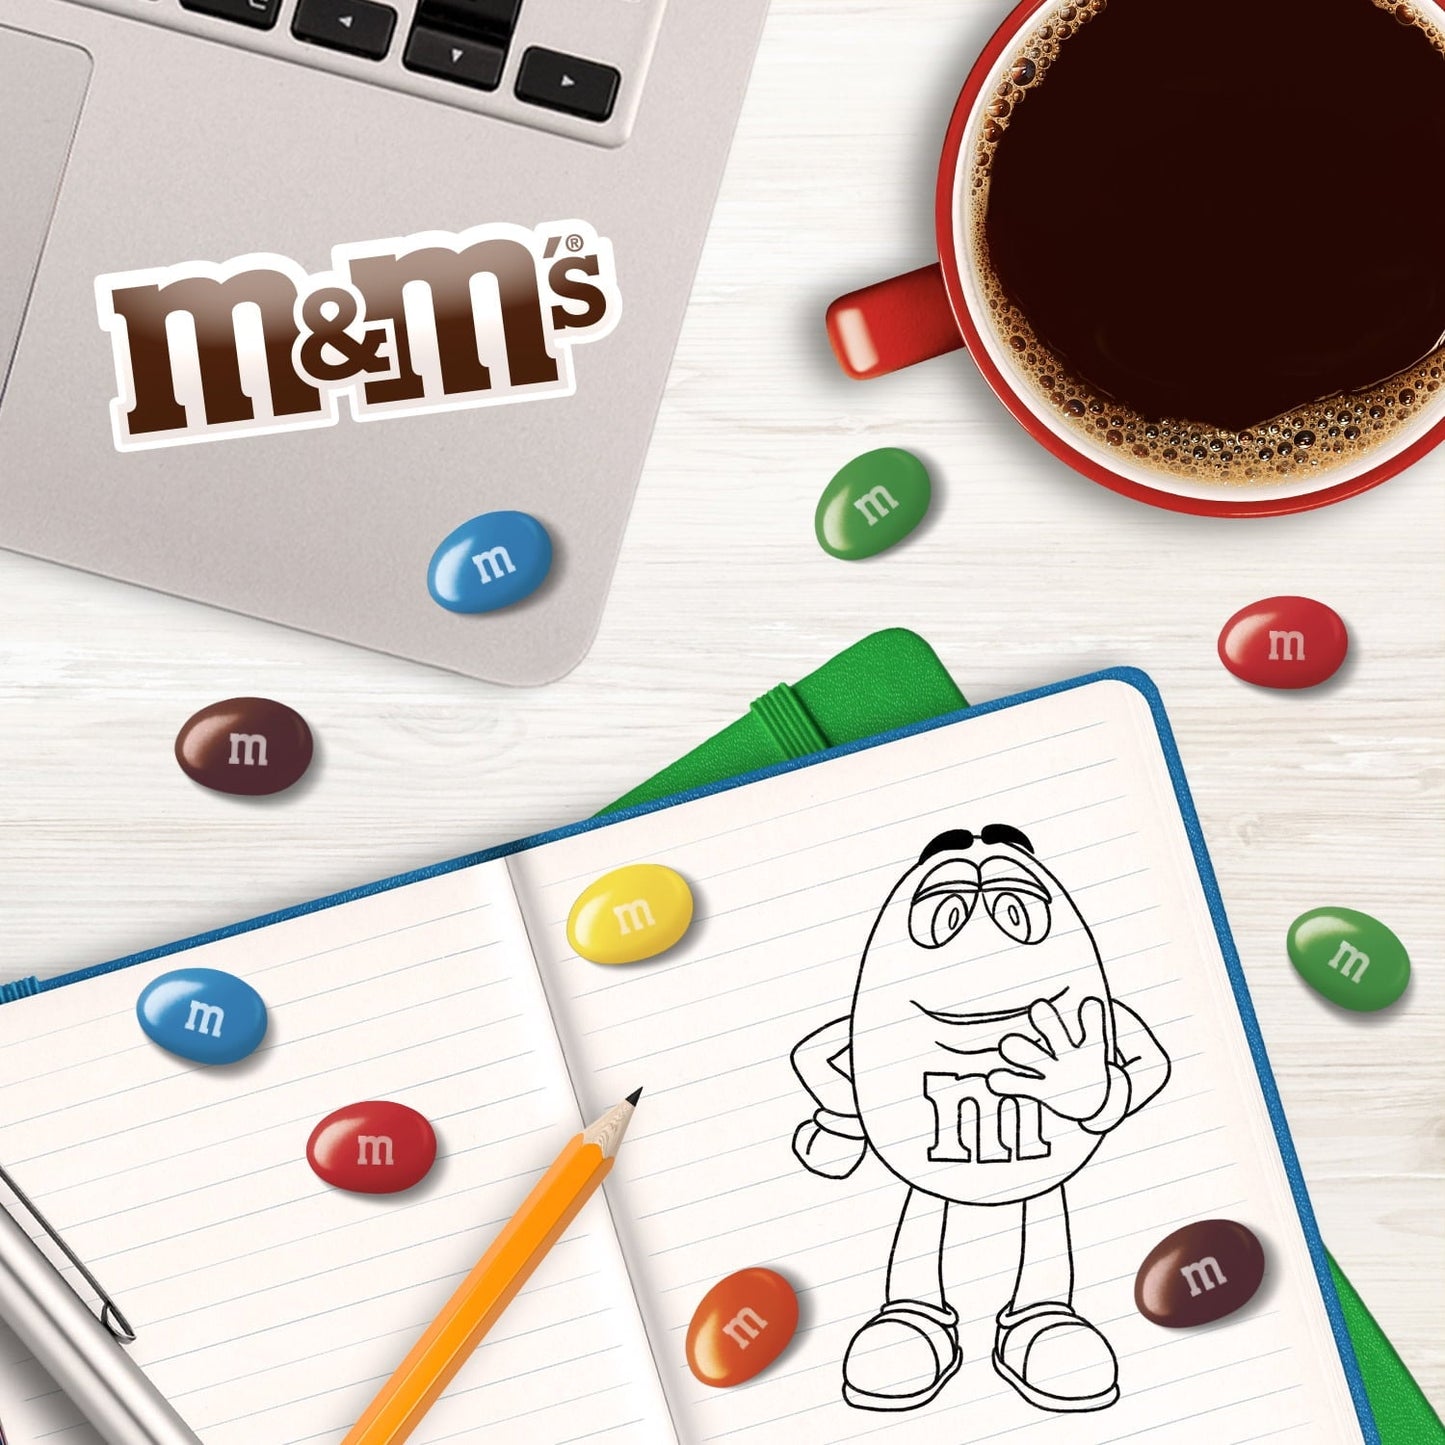 M&M's Peanut Milk Chocolate Candy, Share Size - 3.27 oz Bag